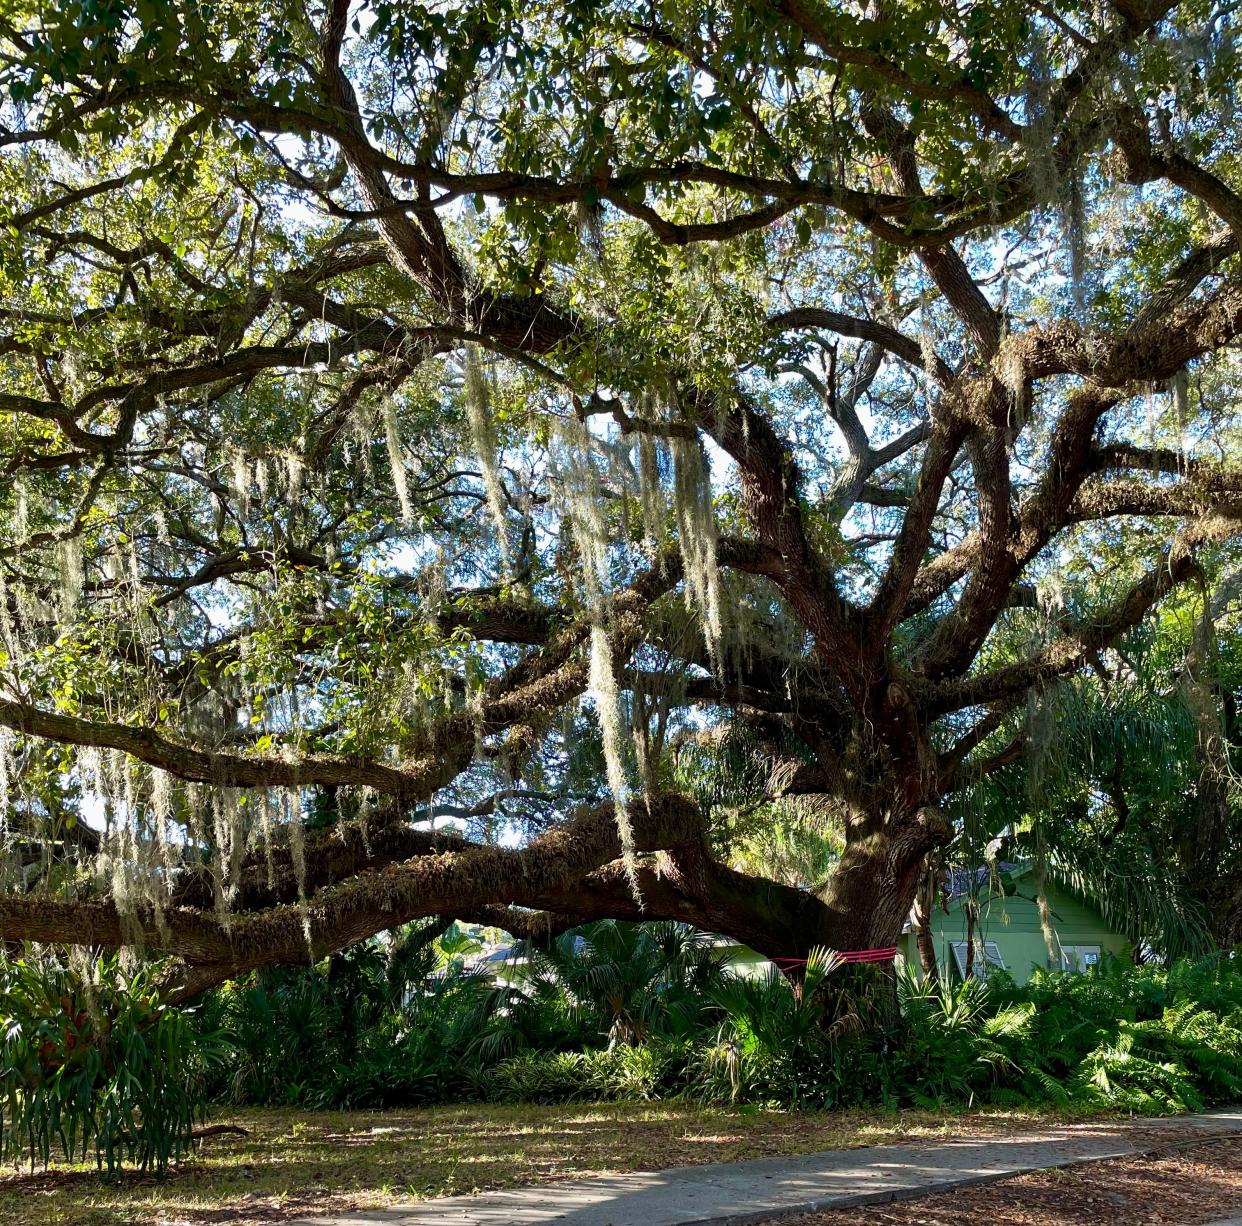 Pink Floyd, a tree in Sarasota's Arlington Park neighborhood, is more than 200 years old.